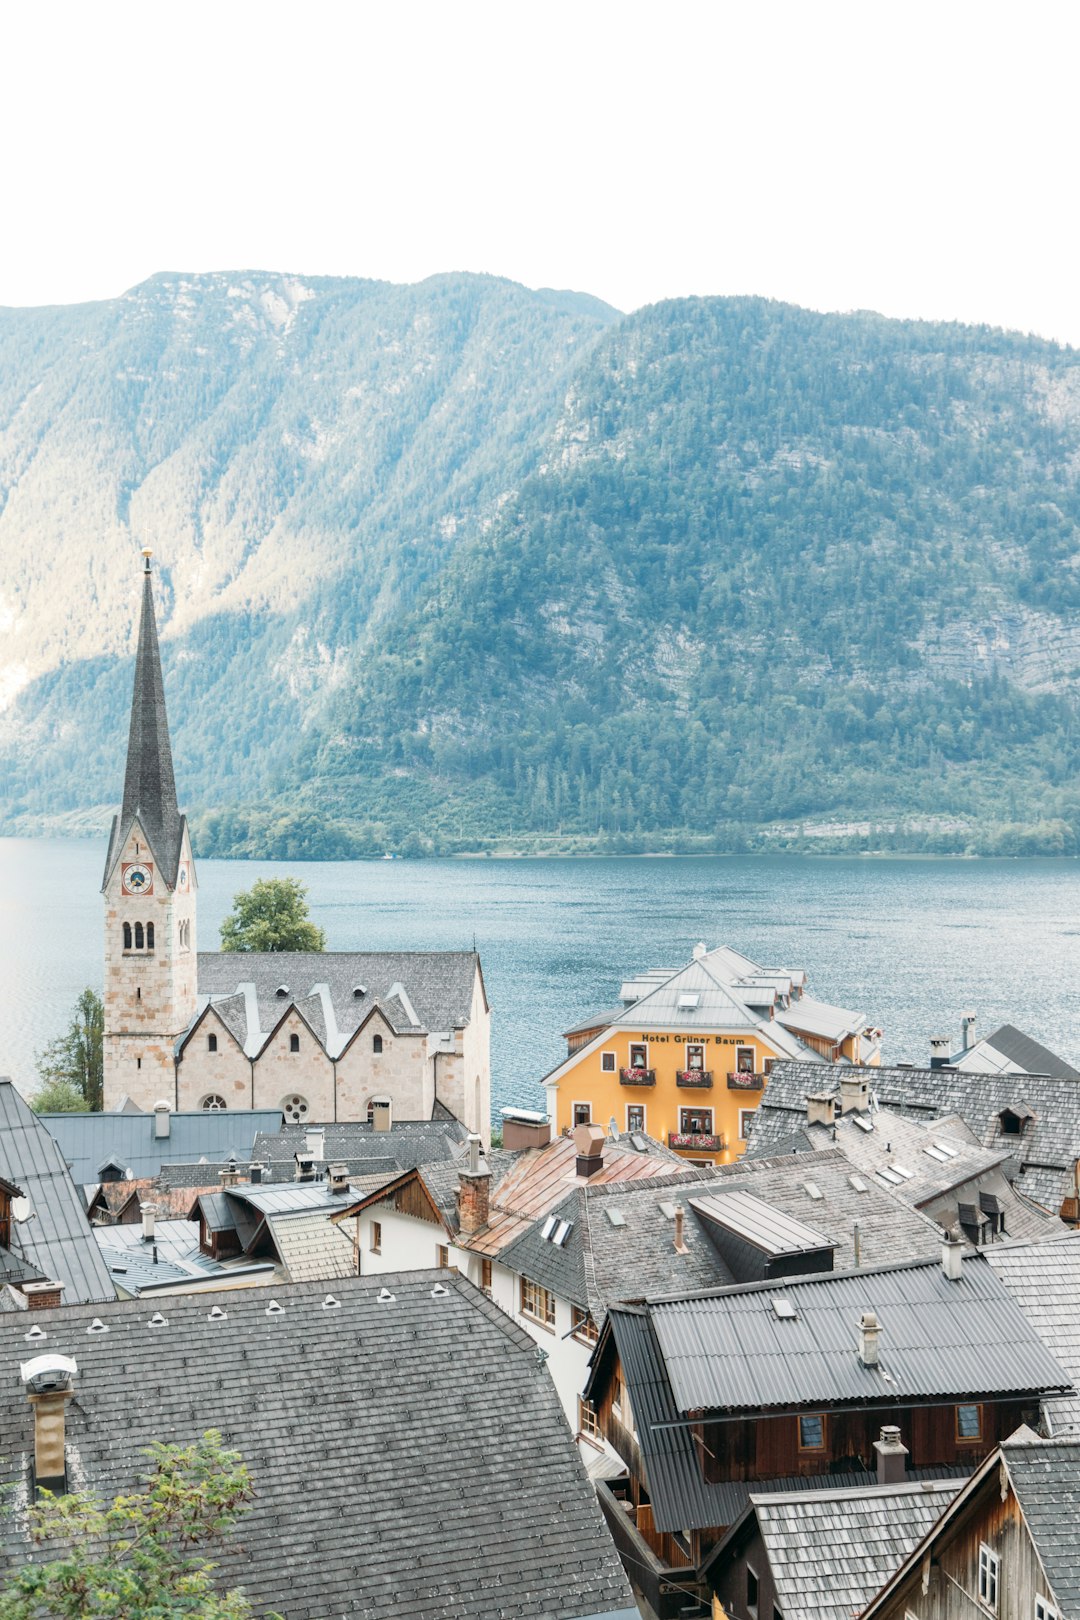 Travel Tips and Stories of Hallstatt in Austria